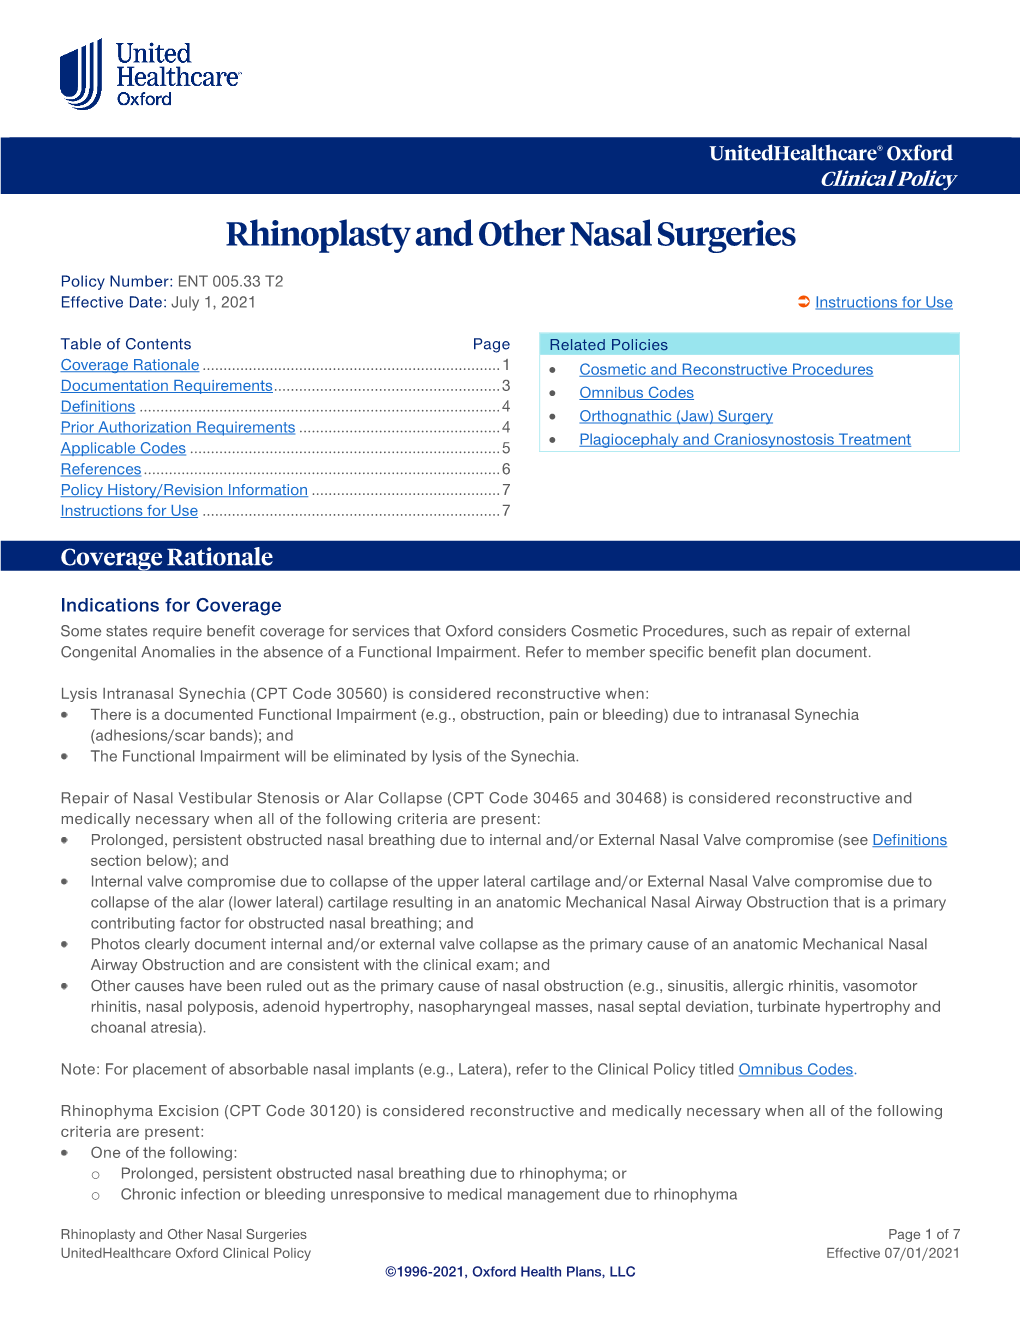 Rhinoplasty and Other Nasal Surgeries – Oxford Reimbursement